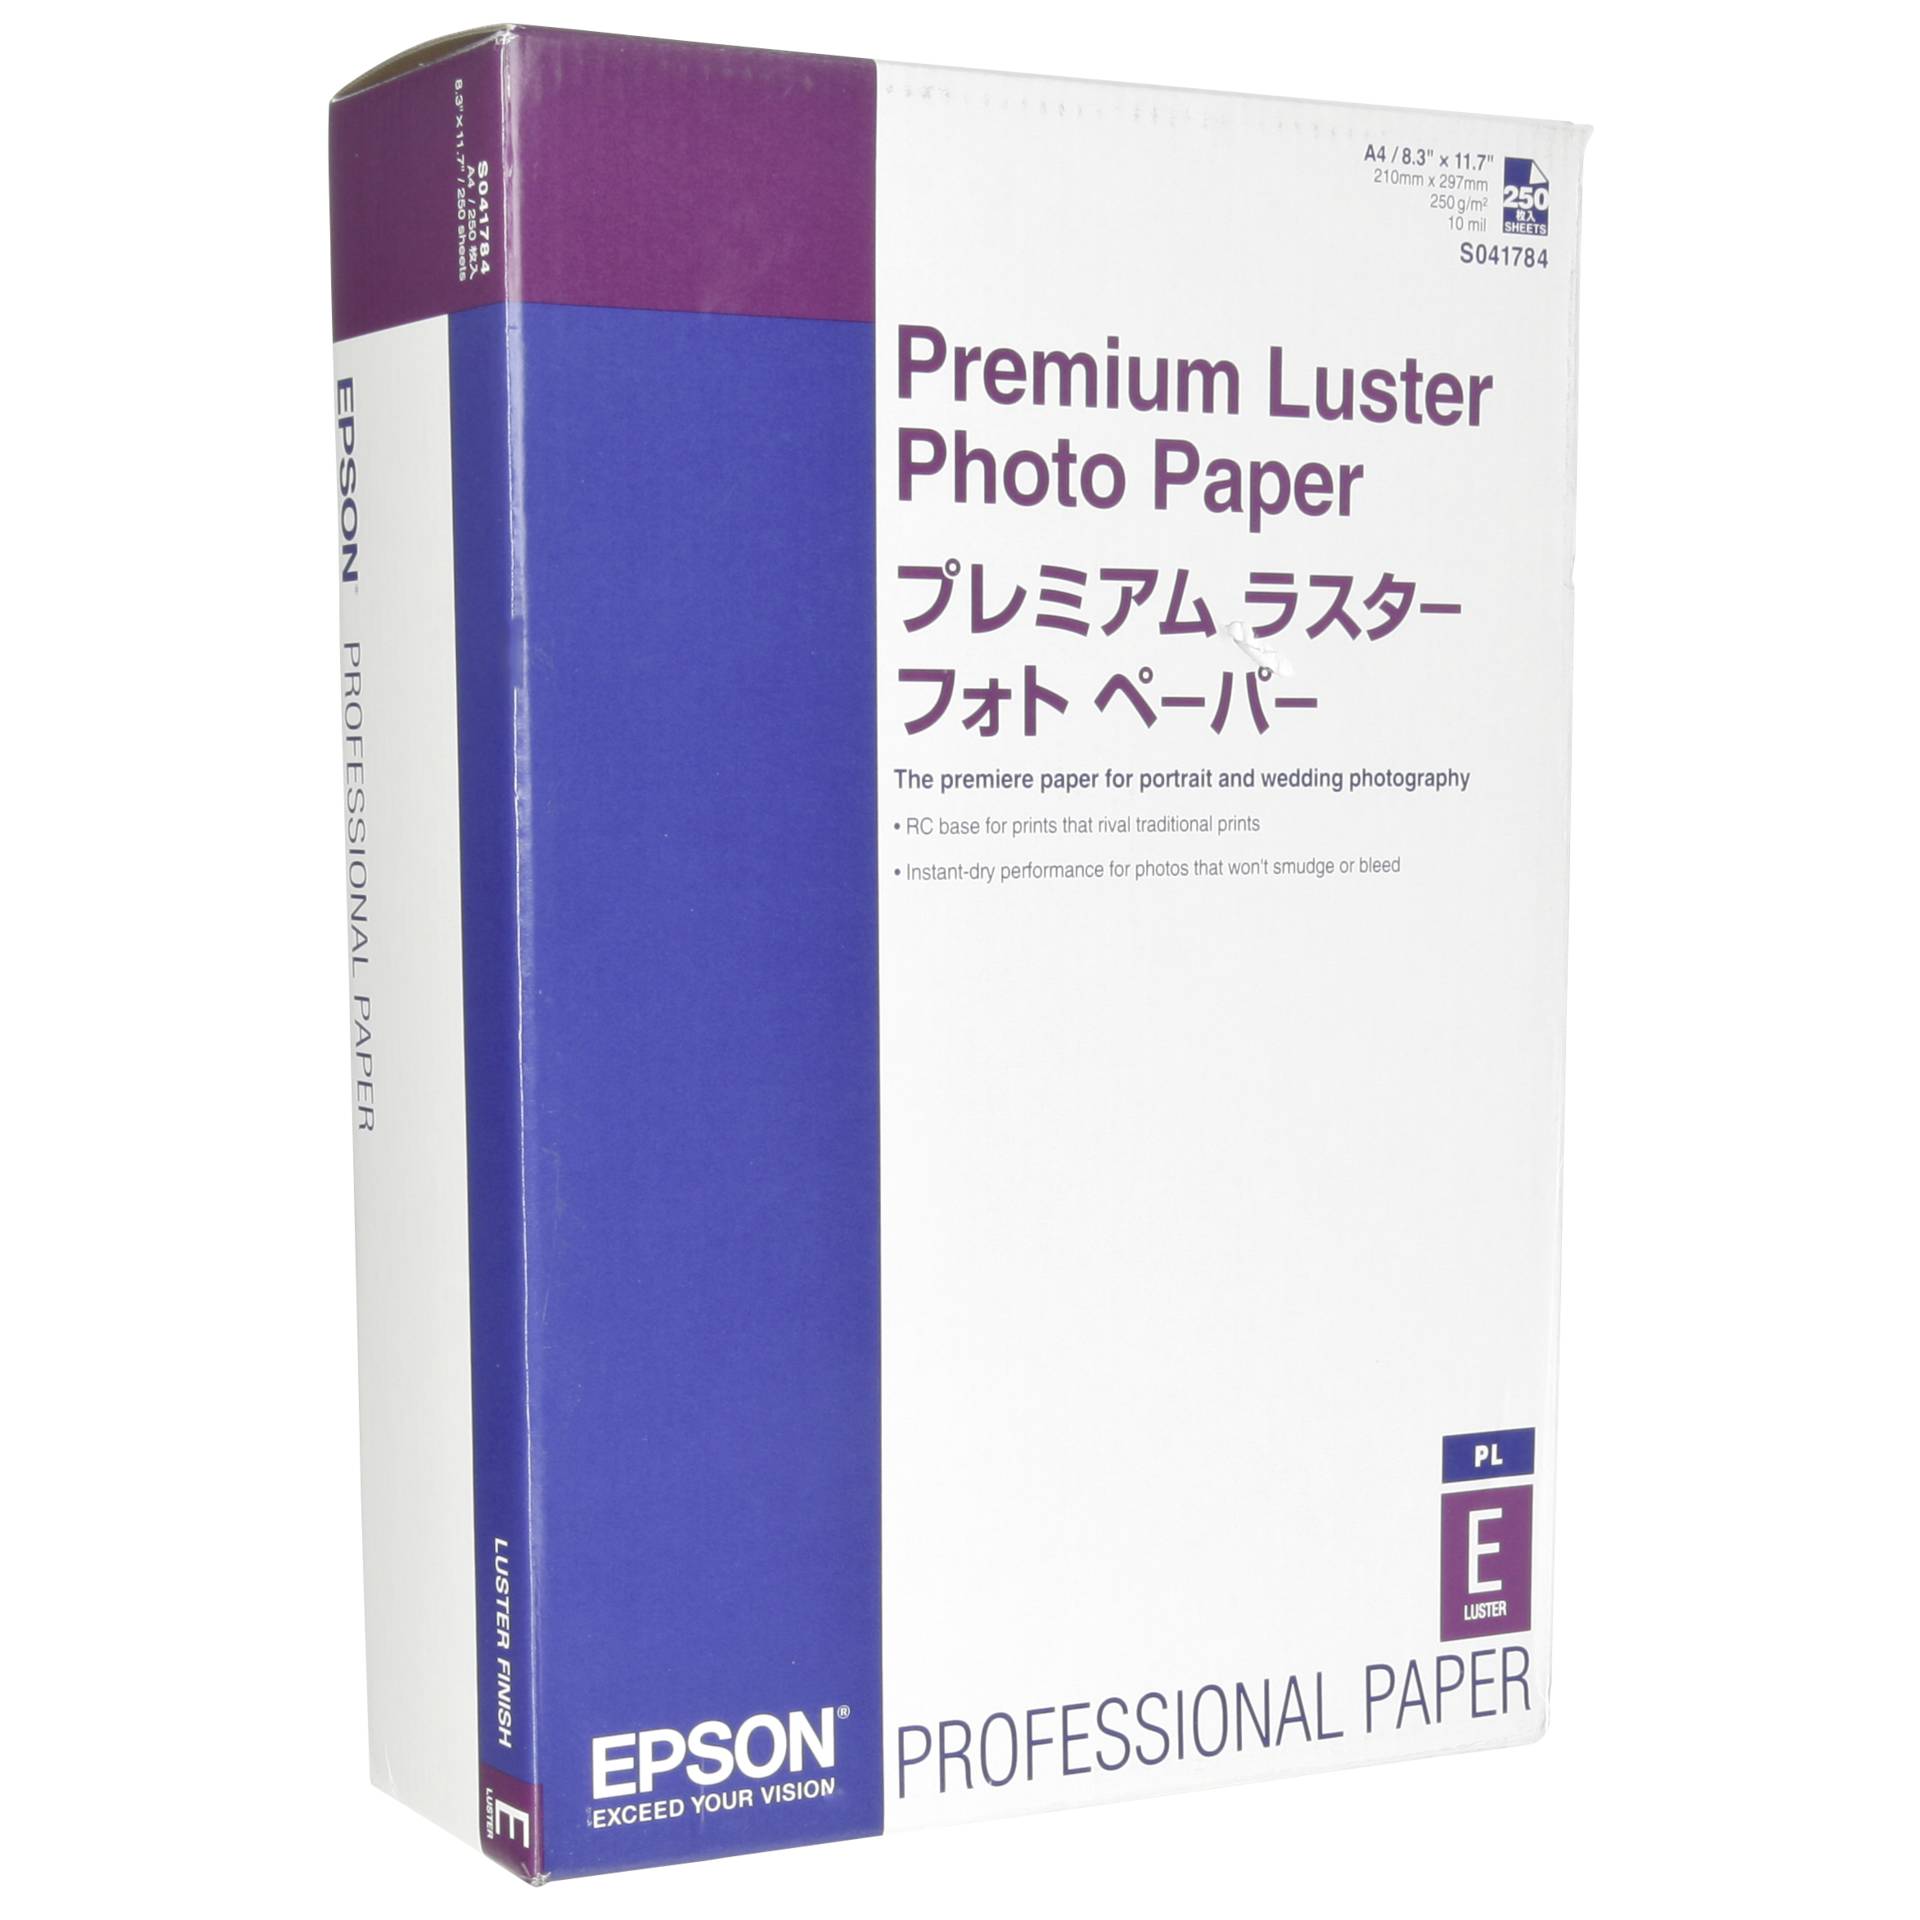 Tenslotte uitroepen metro Epson -Premium Luster -glänzend Fotopapier -A4 (210 x 297 mm) -250 Blatt  (C13S041784) -Epson Hardware/Electronic Grooves.land/Playthek